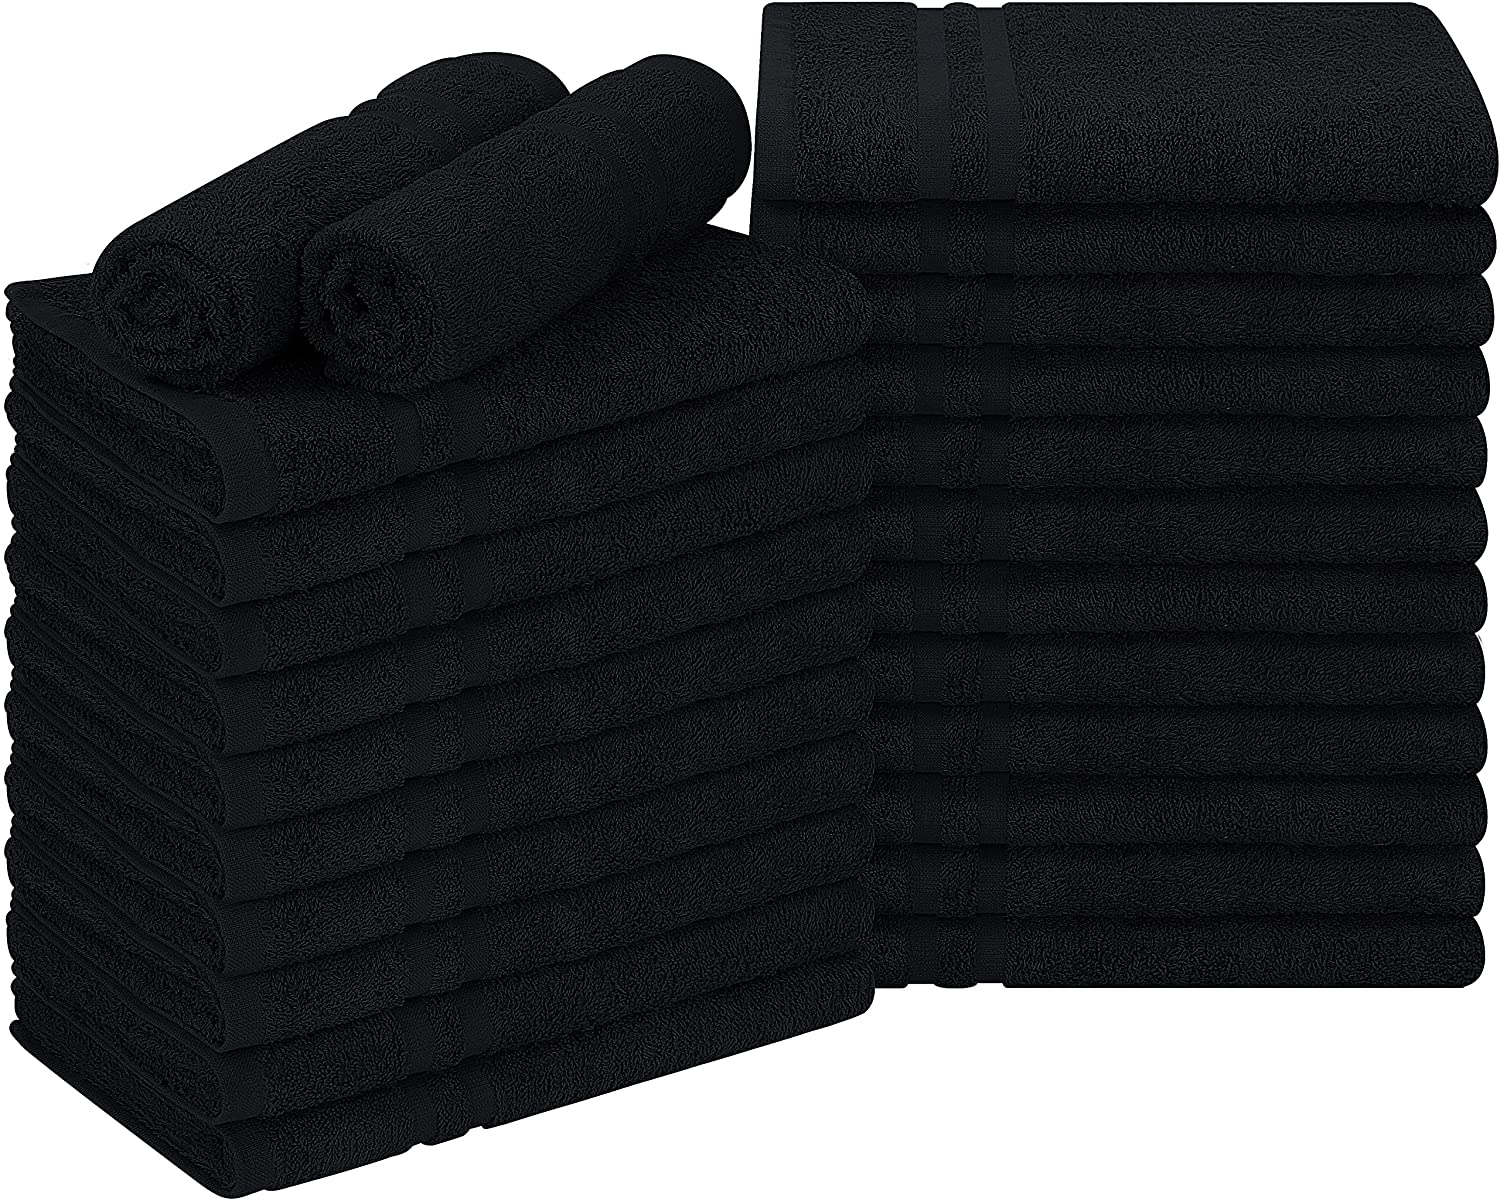 Utopia Handdoeken Cotton Bleach Proof Salon Handdoeken (16x27 inch) - Bleach Safe Gym Handdoek (24 Pack